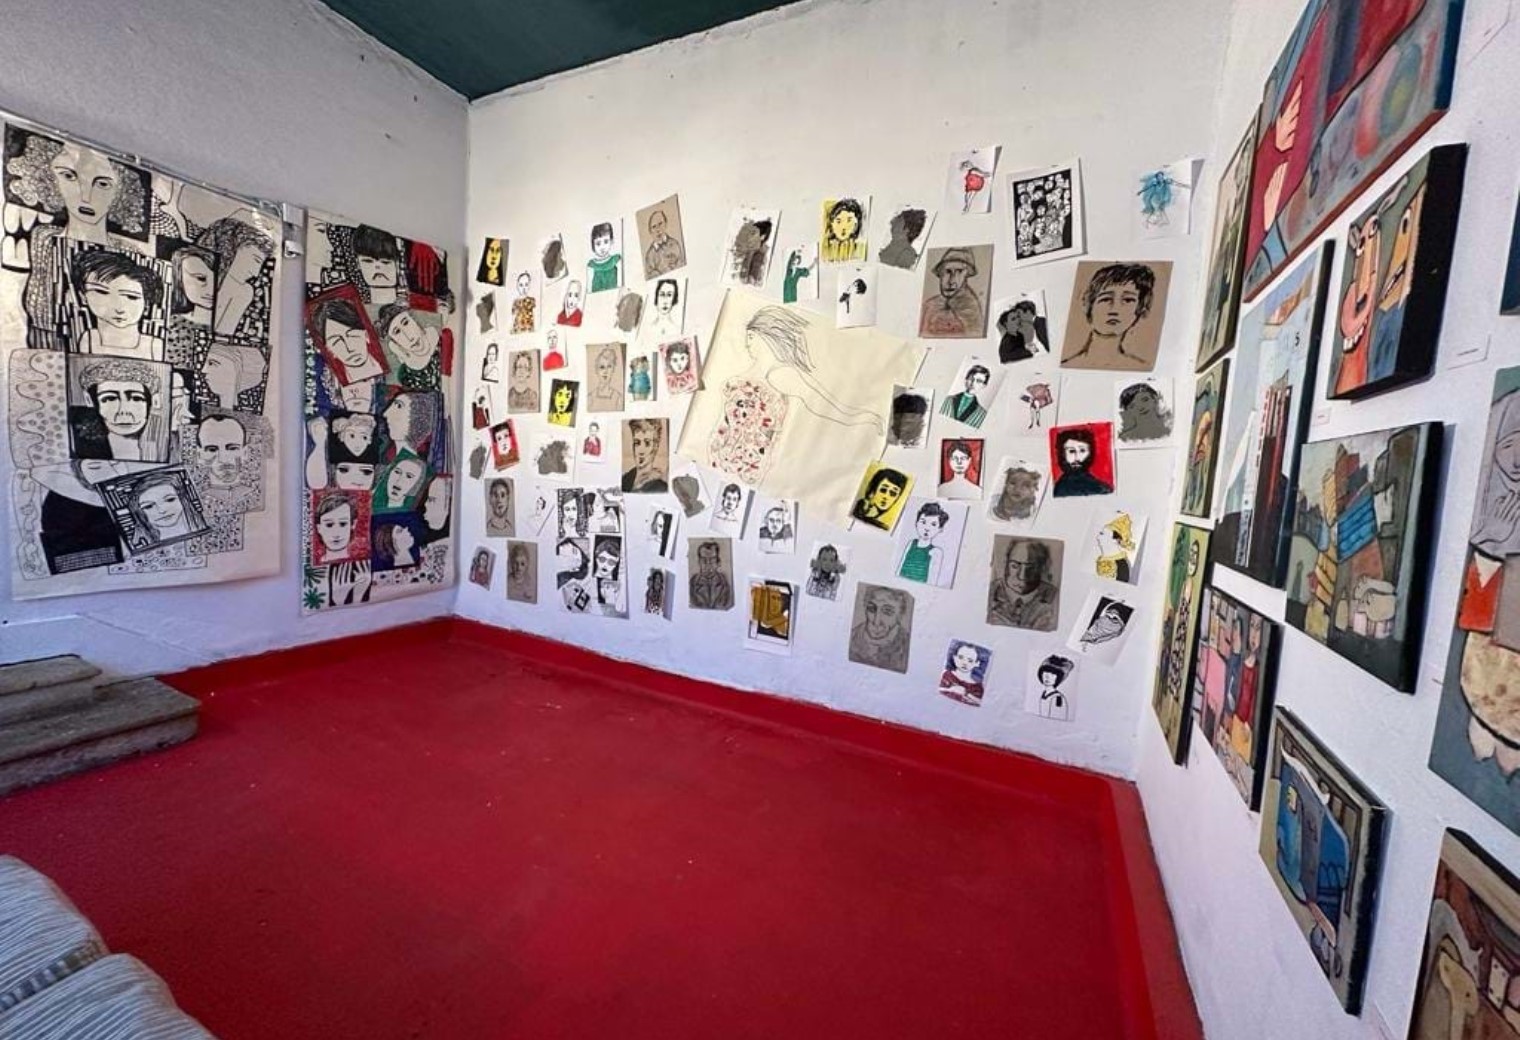 Exhibition "inconjuntos", by Nélia Duarte